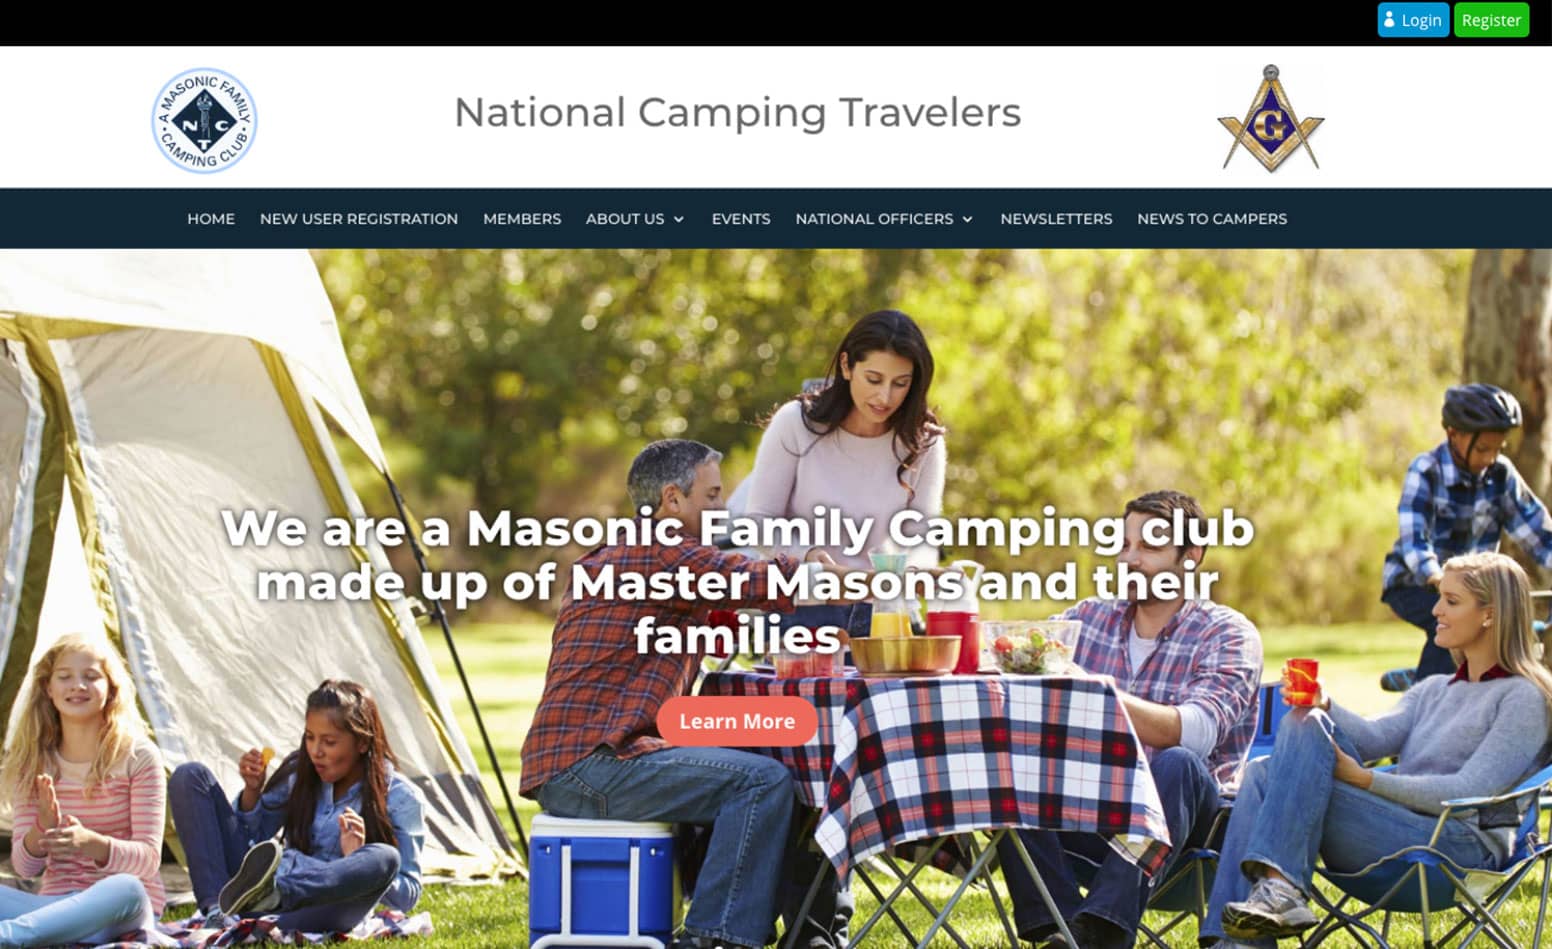 National Camping Travelers website, web design Western MA, web design CT, marketing agency, graphic design company, branding